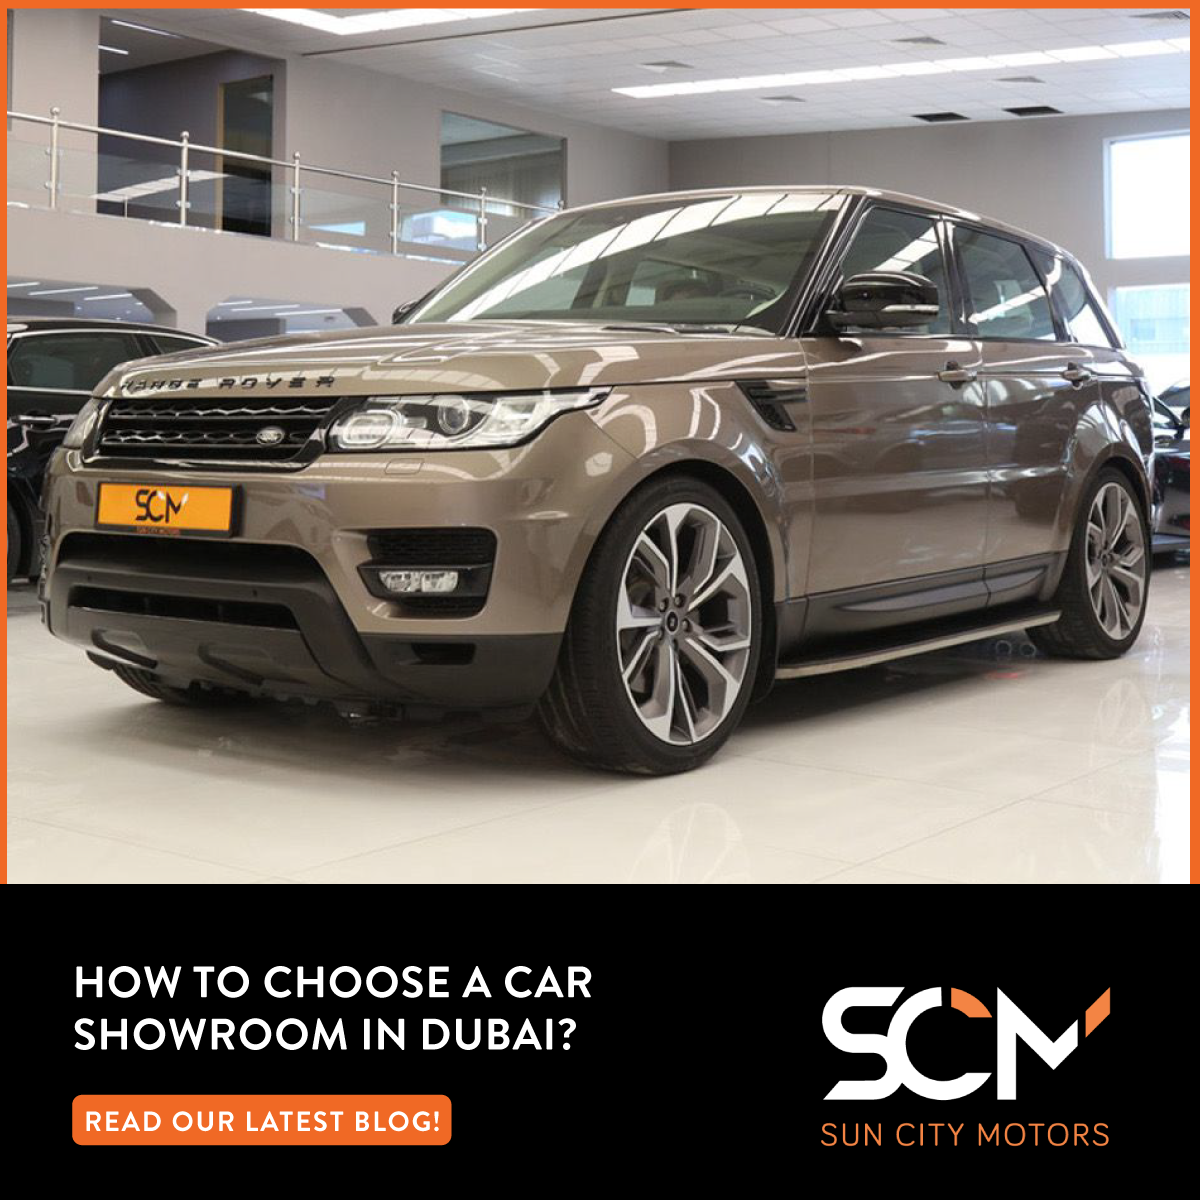 How to choose a car showroom in Dubai